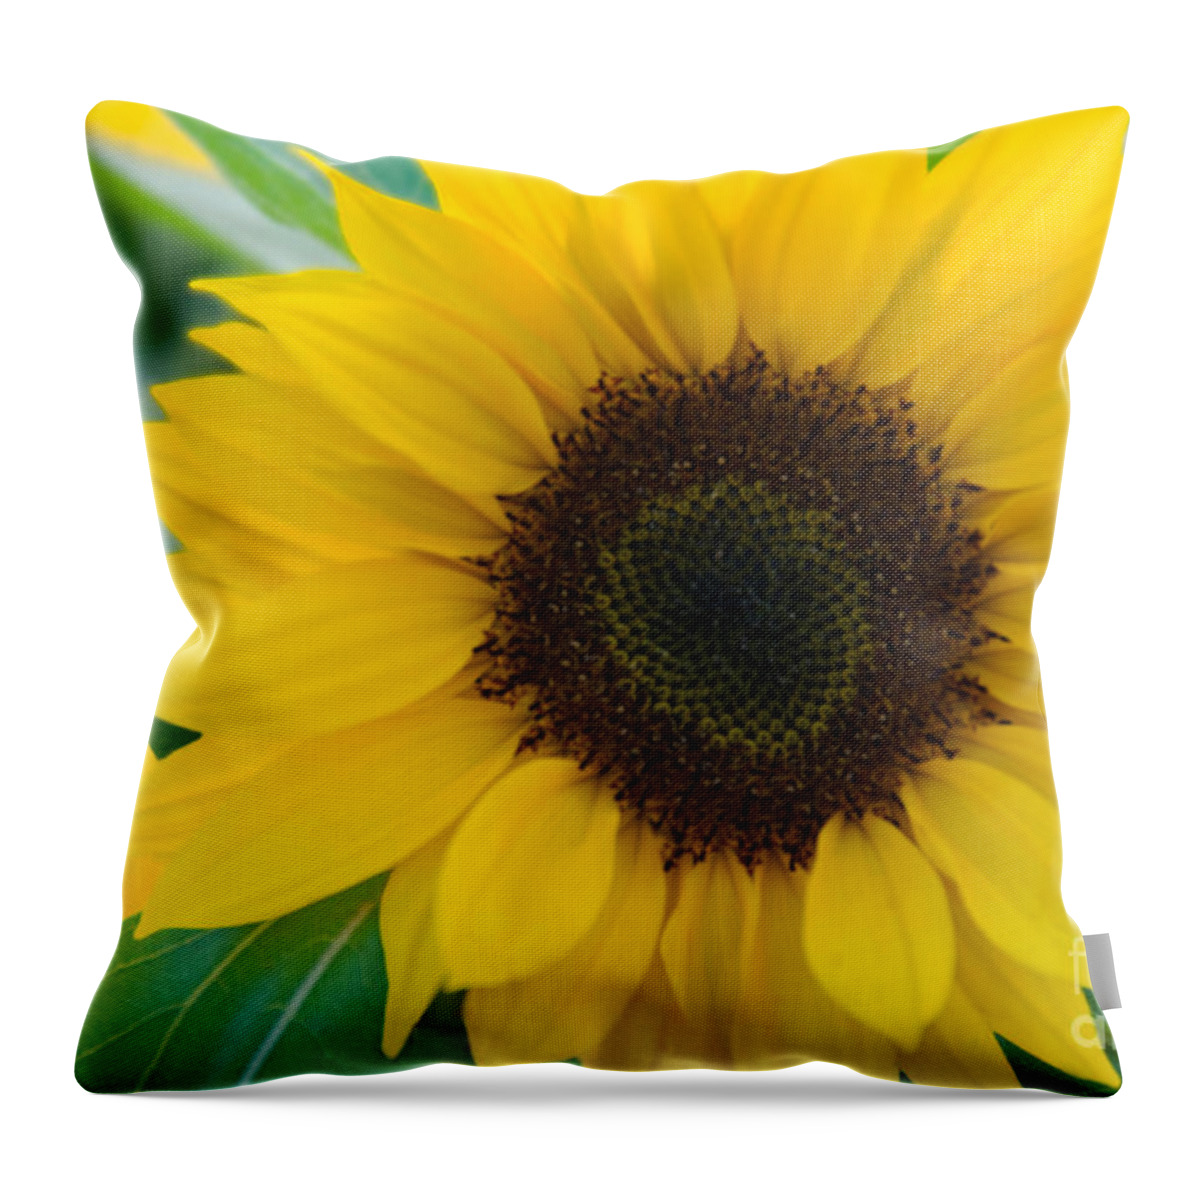 Flower Throw Pillow featuring the photograph Sunflower #2 by Richard and Ellen Thane